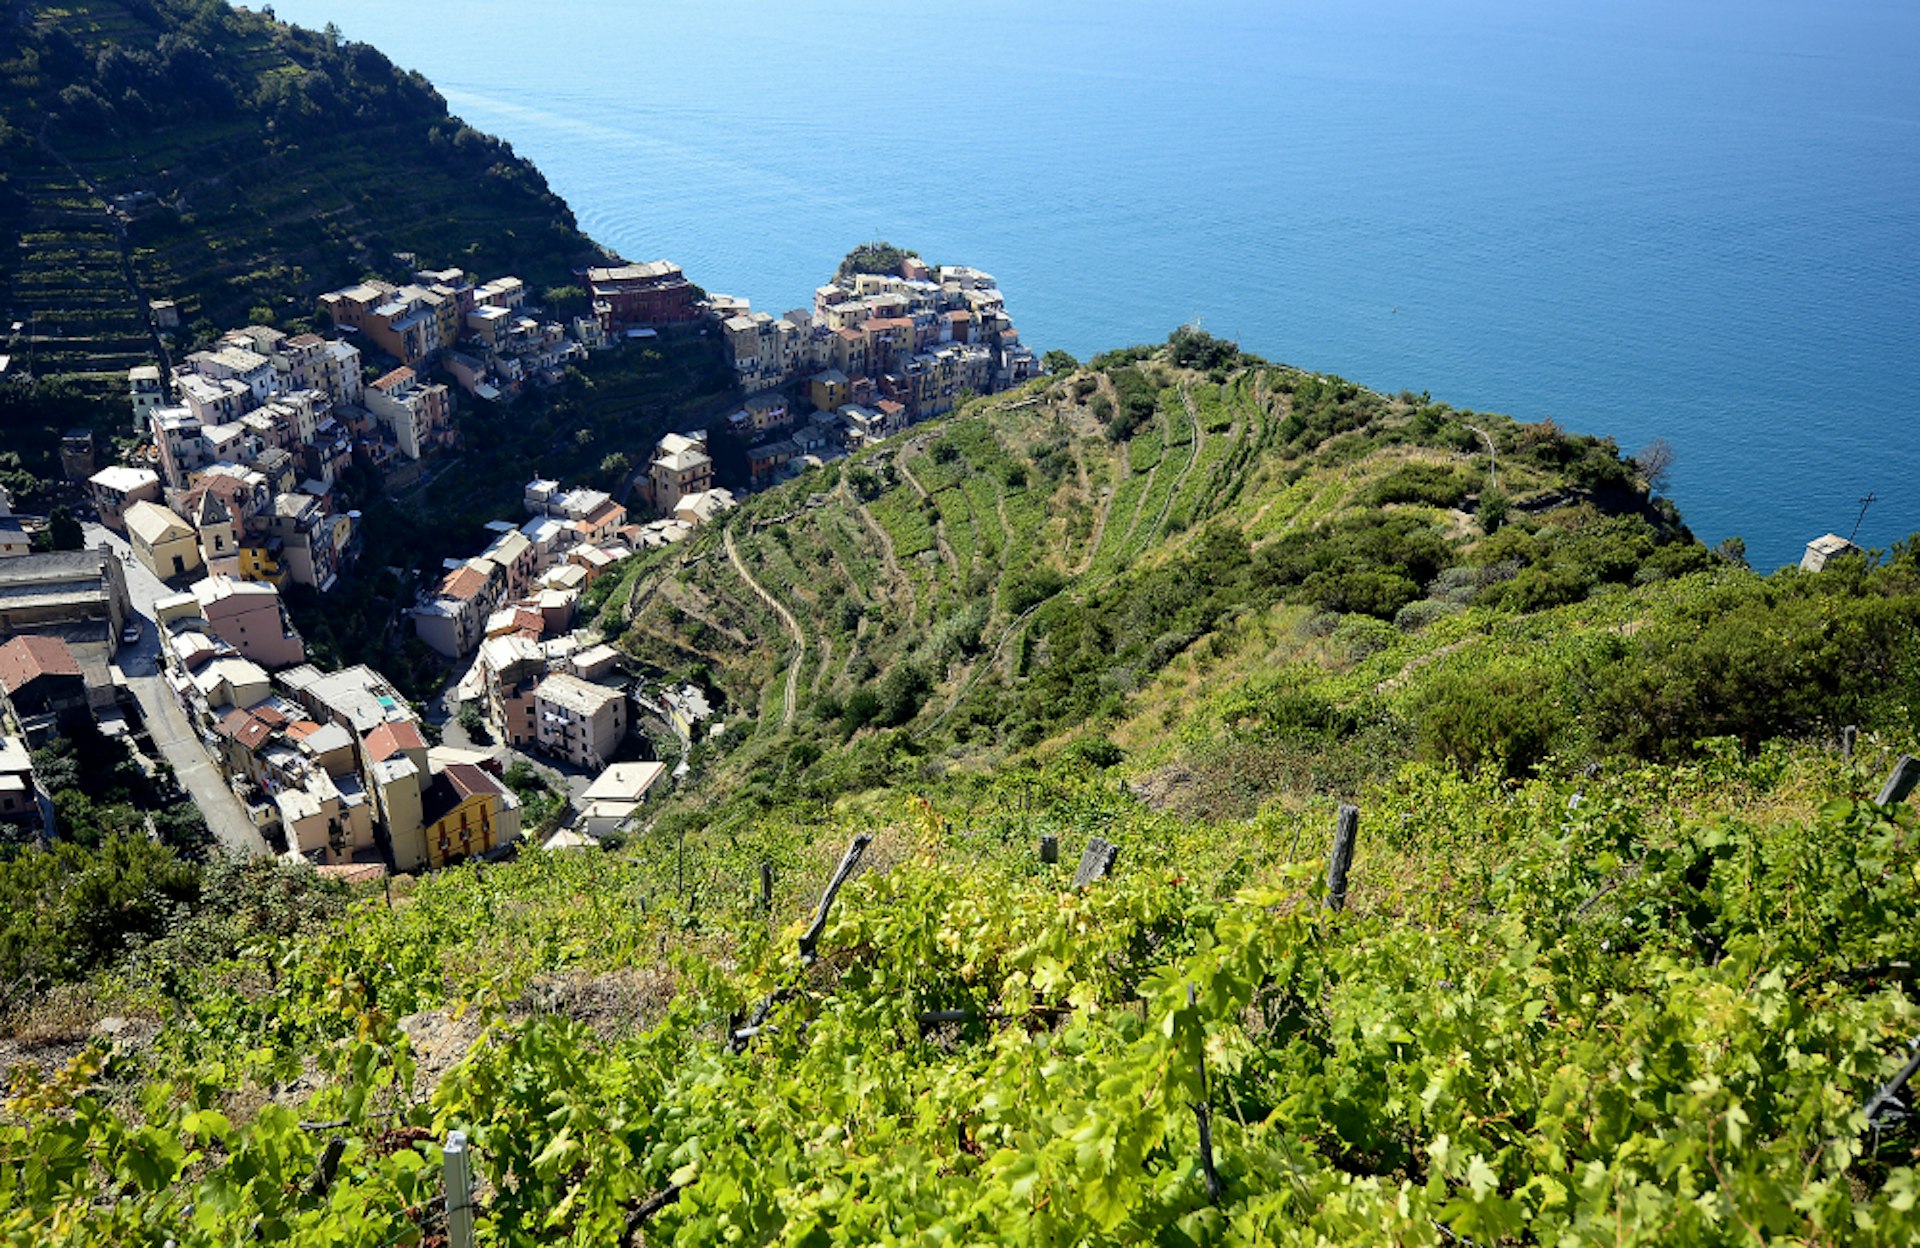 Grape vines growing on the precipitous hills above Manarola in the Cinque Terre.